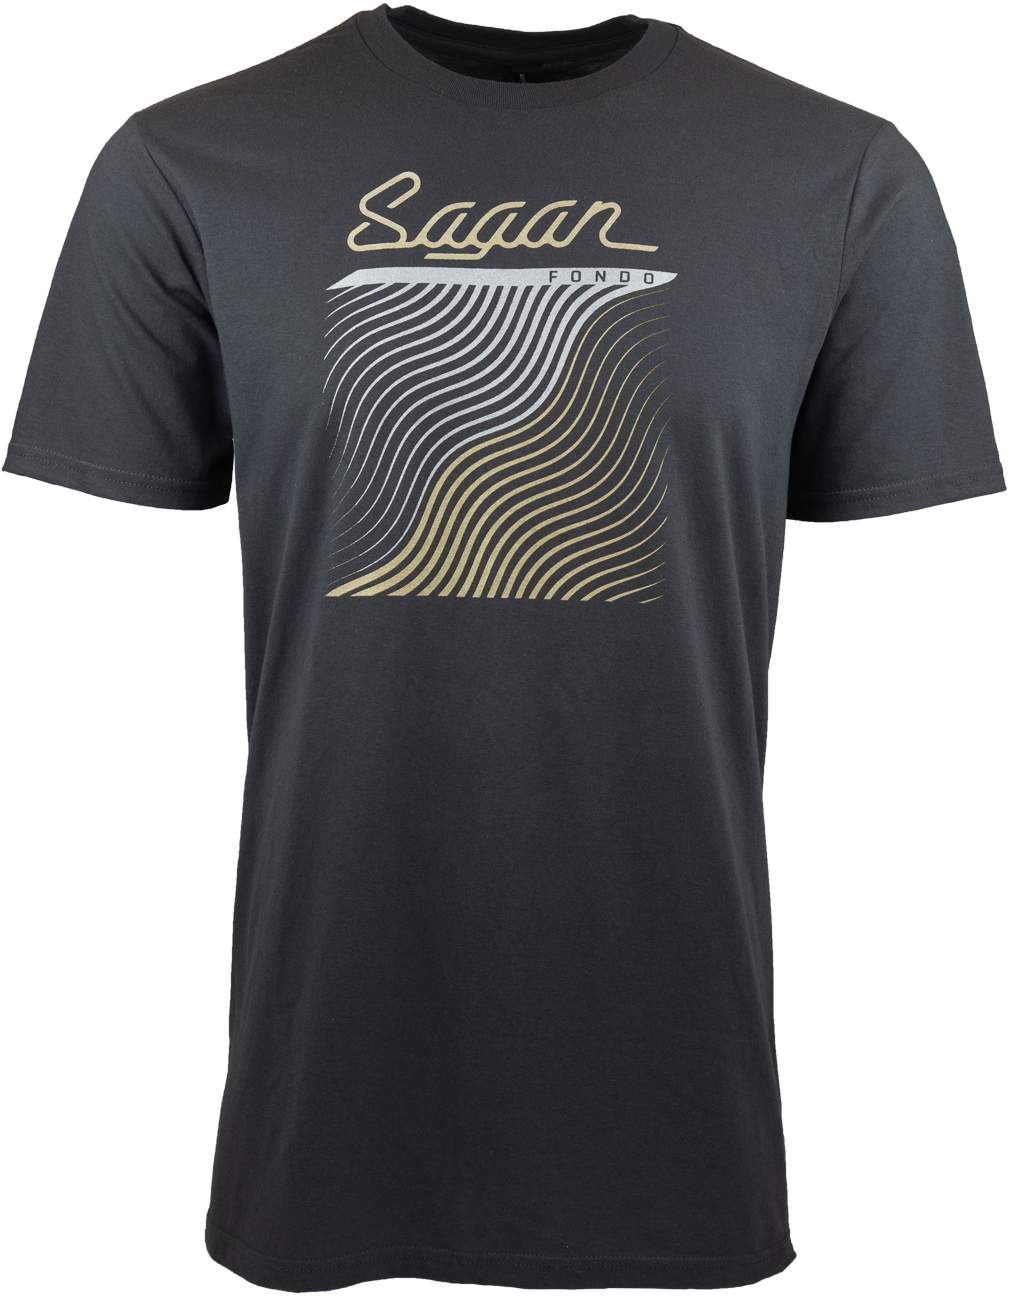 Sagan Road Fondo Commemorative T-Shirt